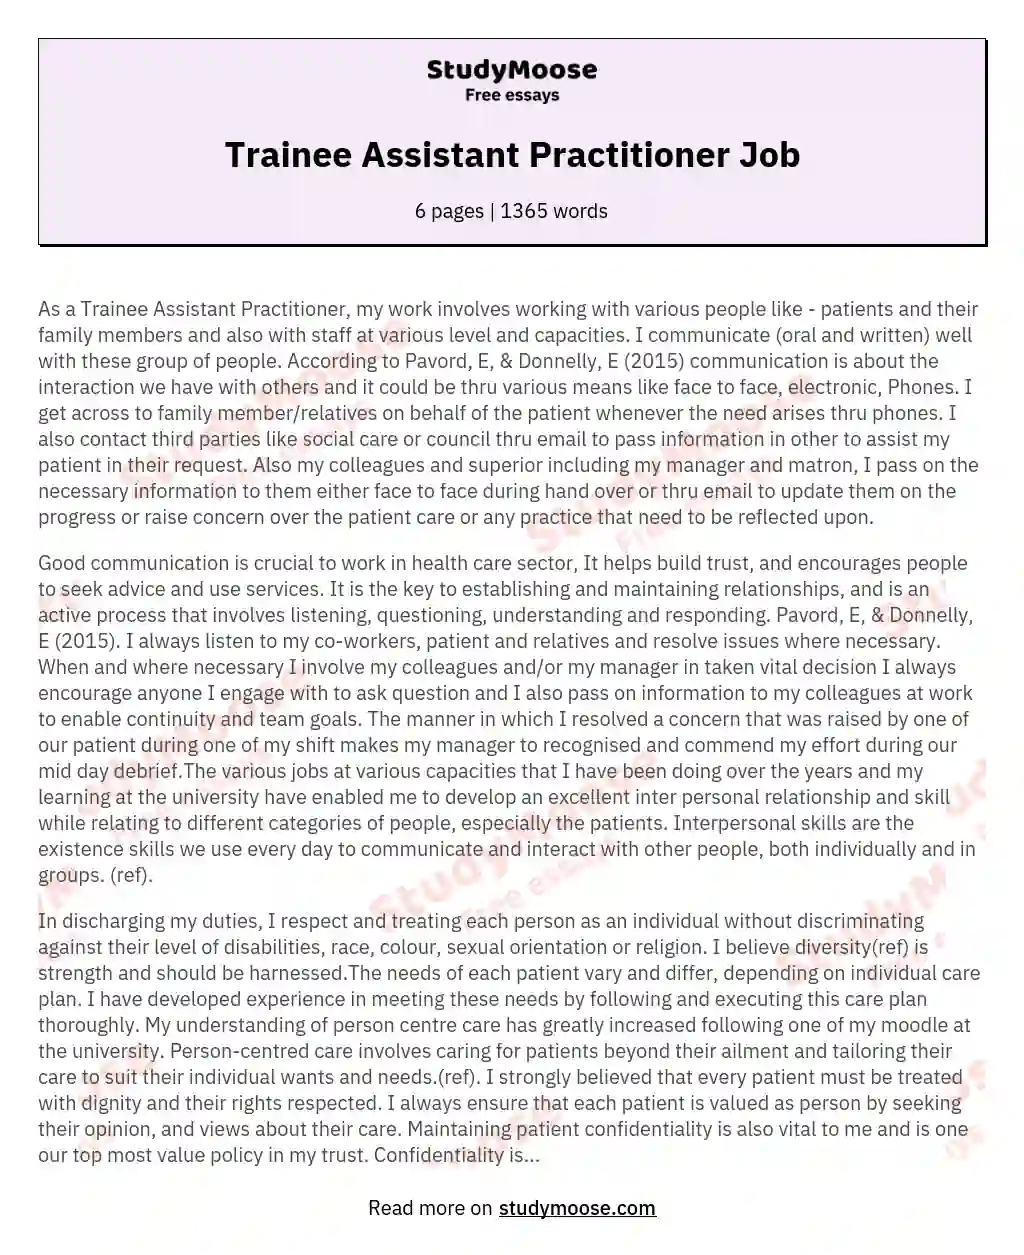 Trainee Assistant Practitioner Job essay